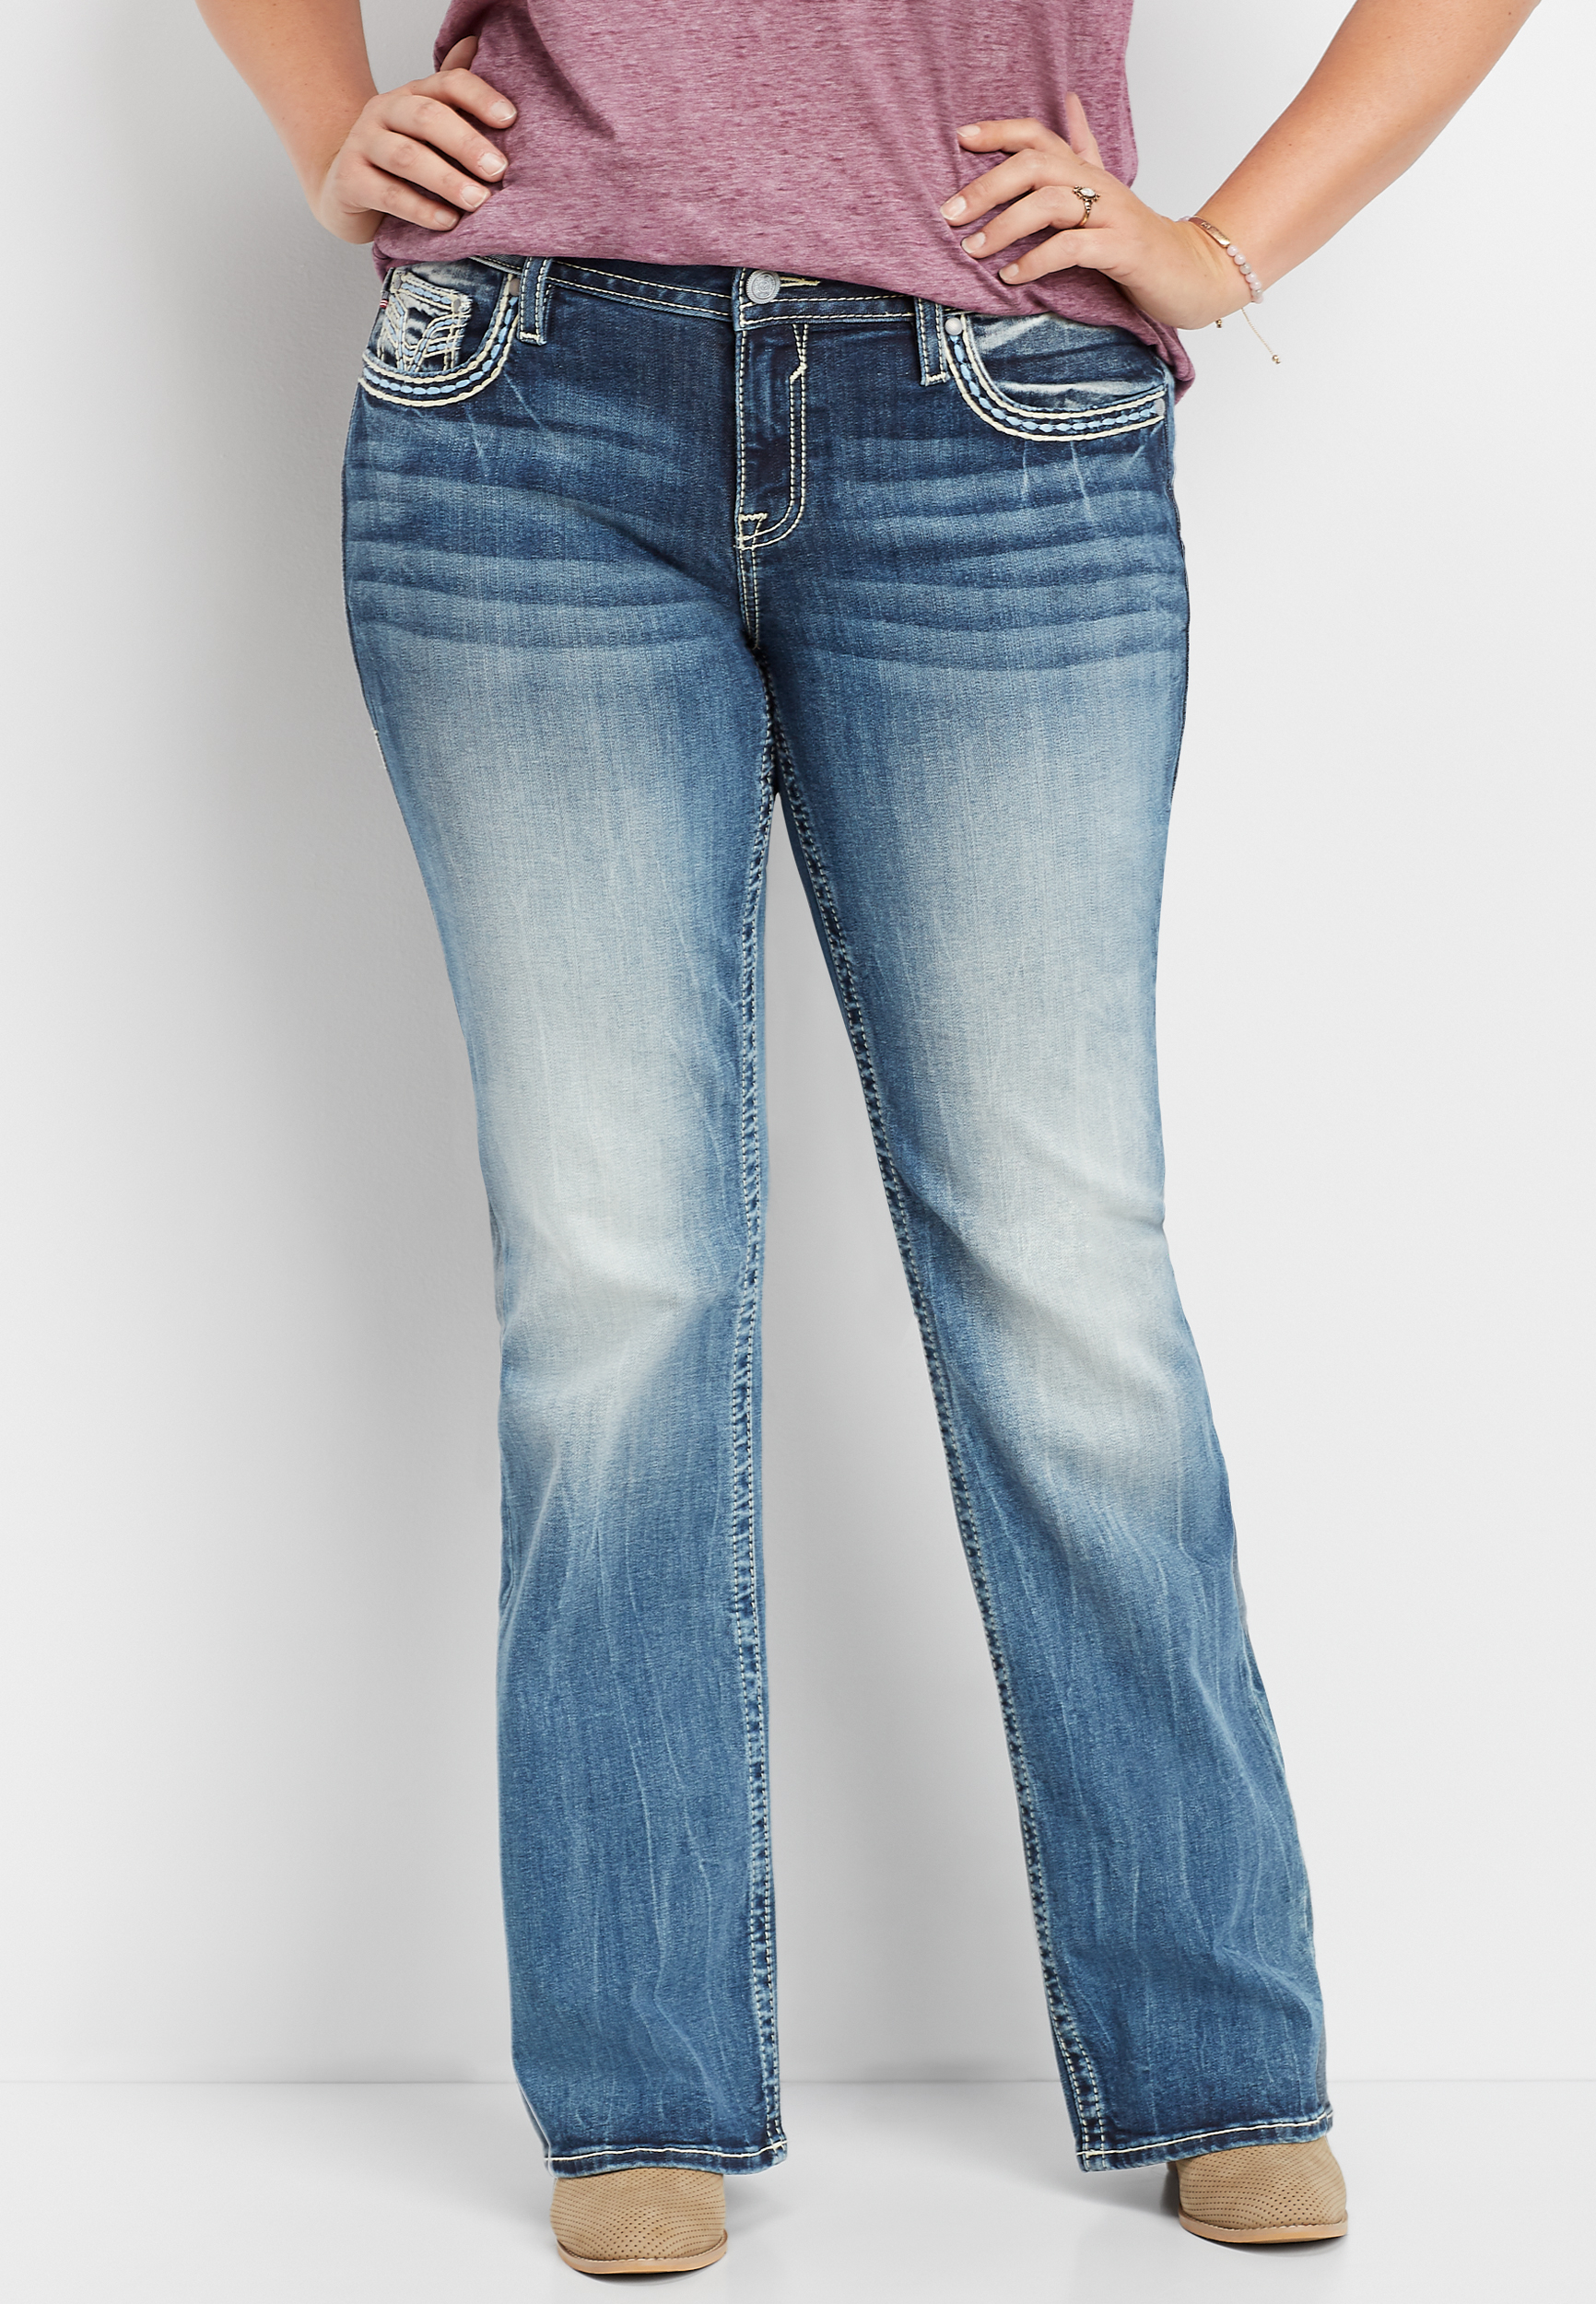 vigoss jeans size chart